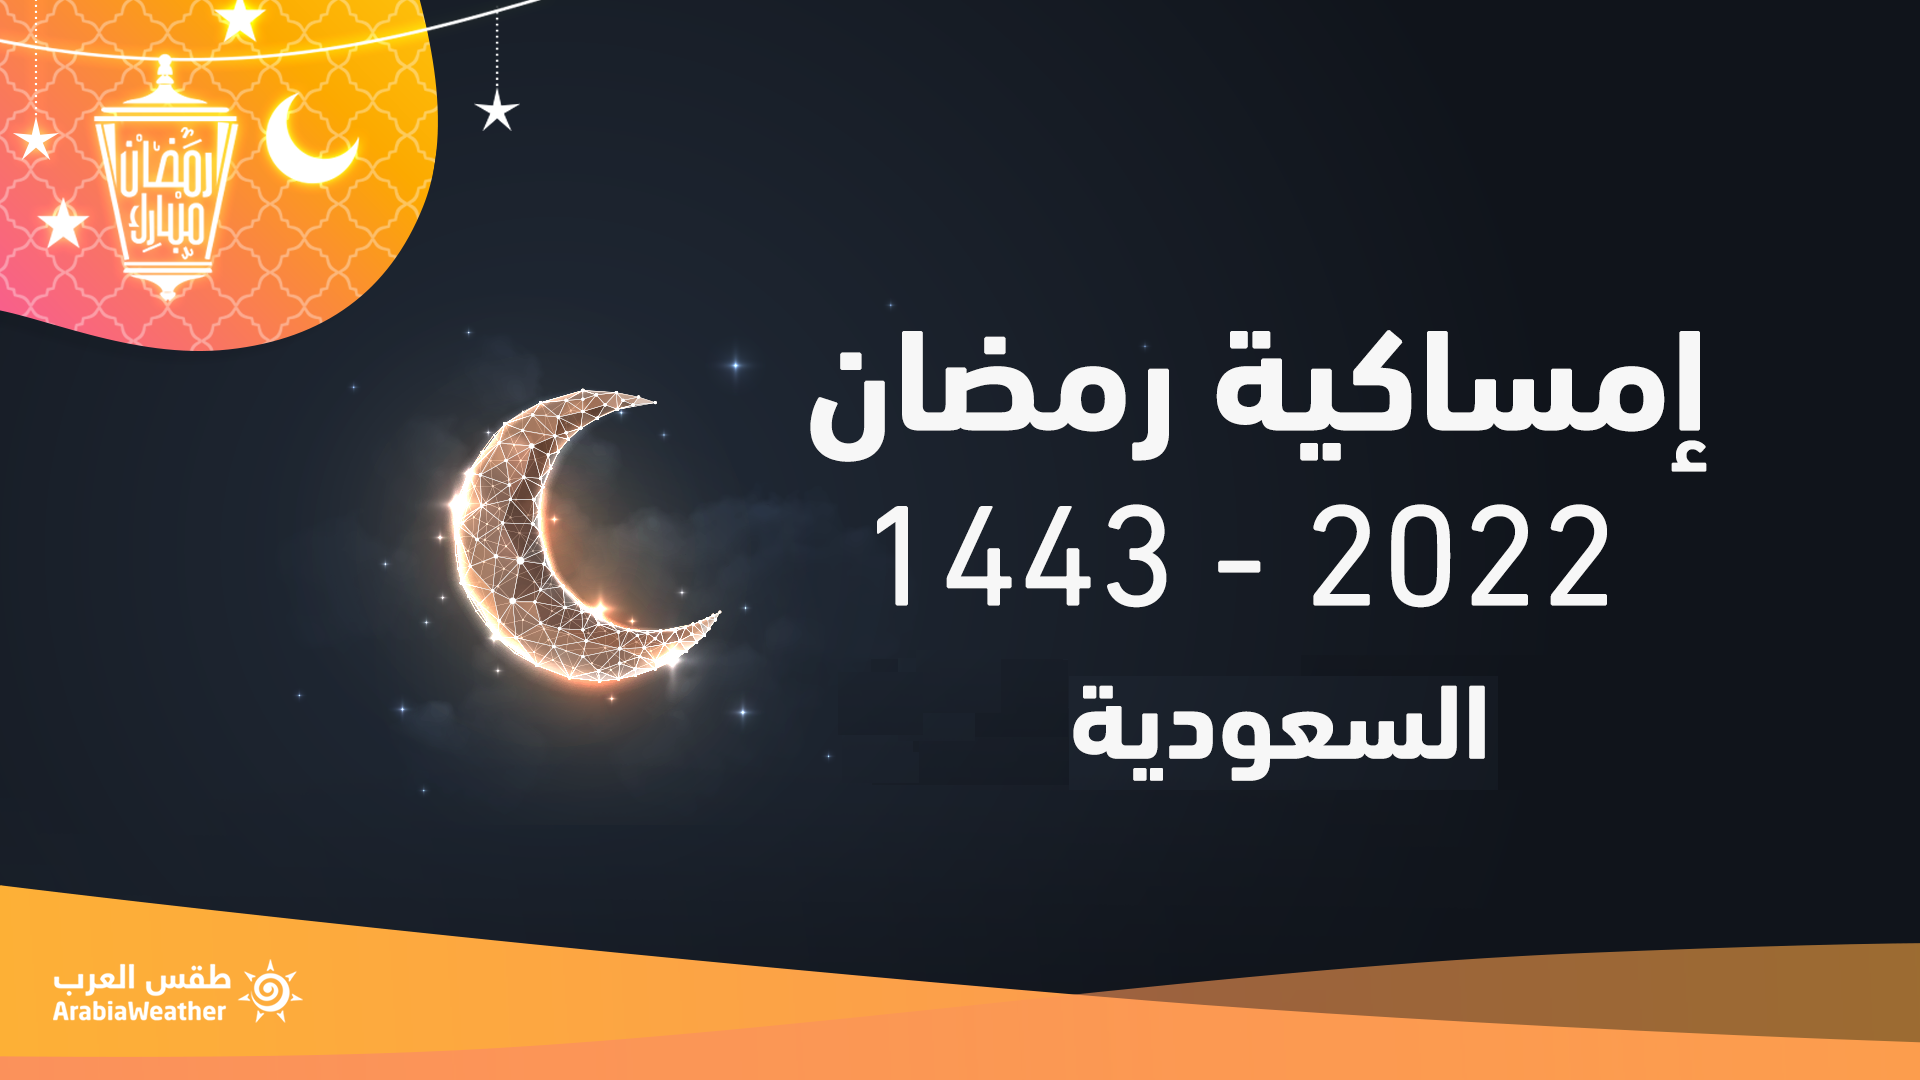 Calendrier ramadan 2022 – 1443 (IMSAKIA) – Mosquée de Hautepierre